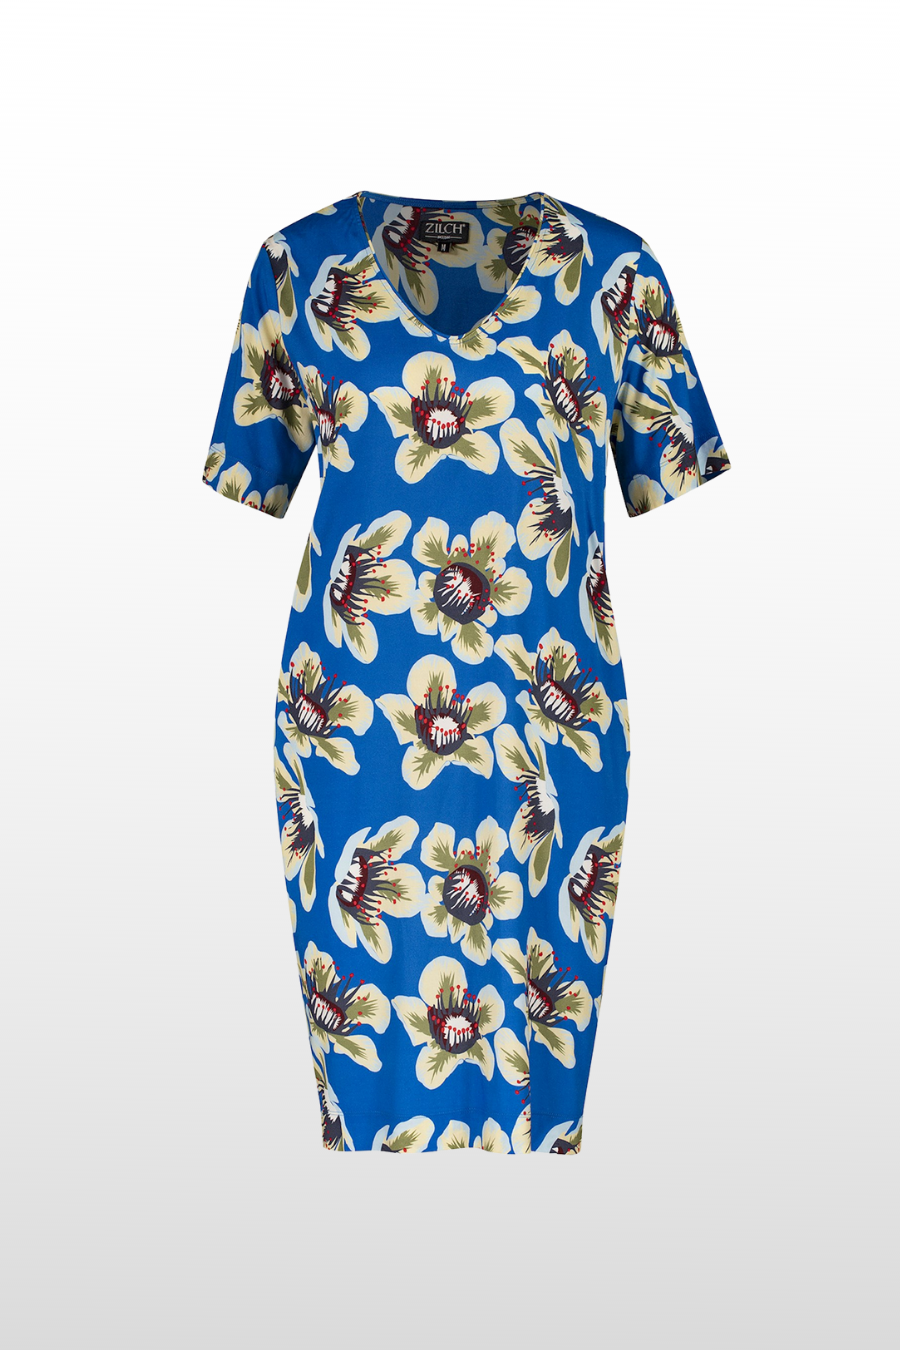 v neck, short sleeve dress with large flower print